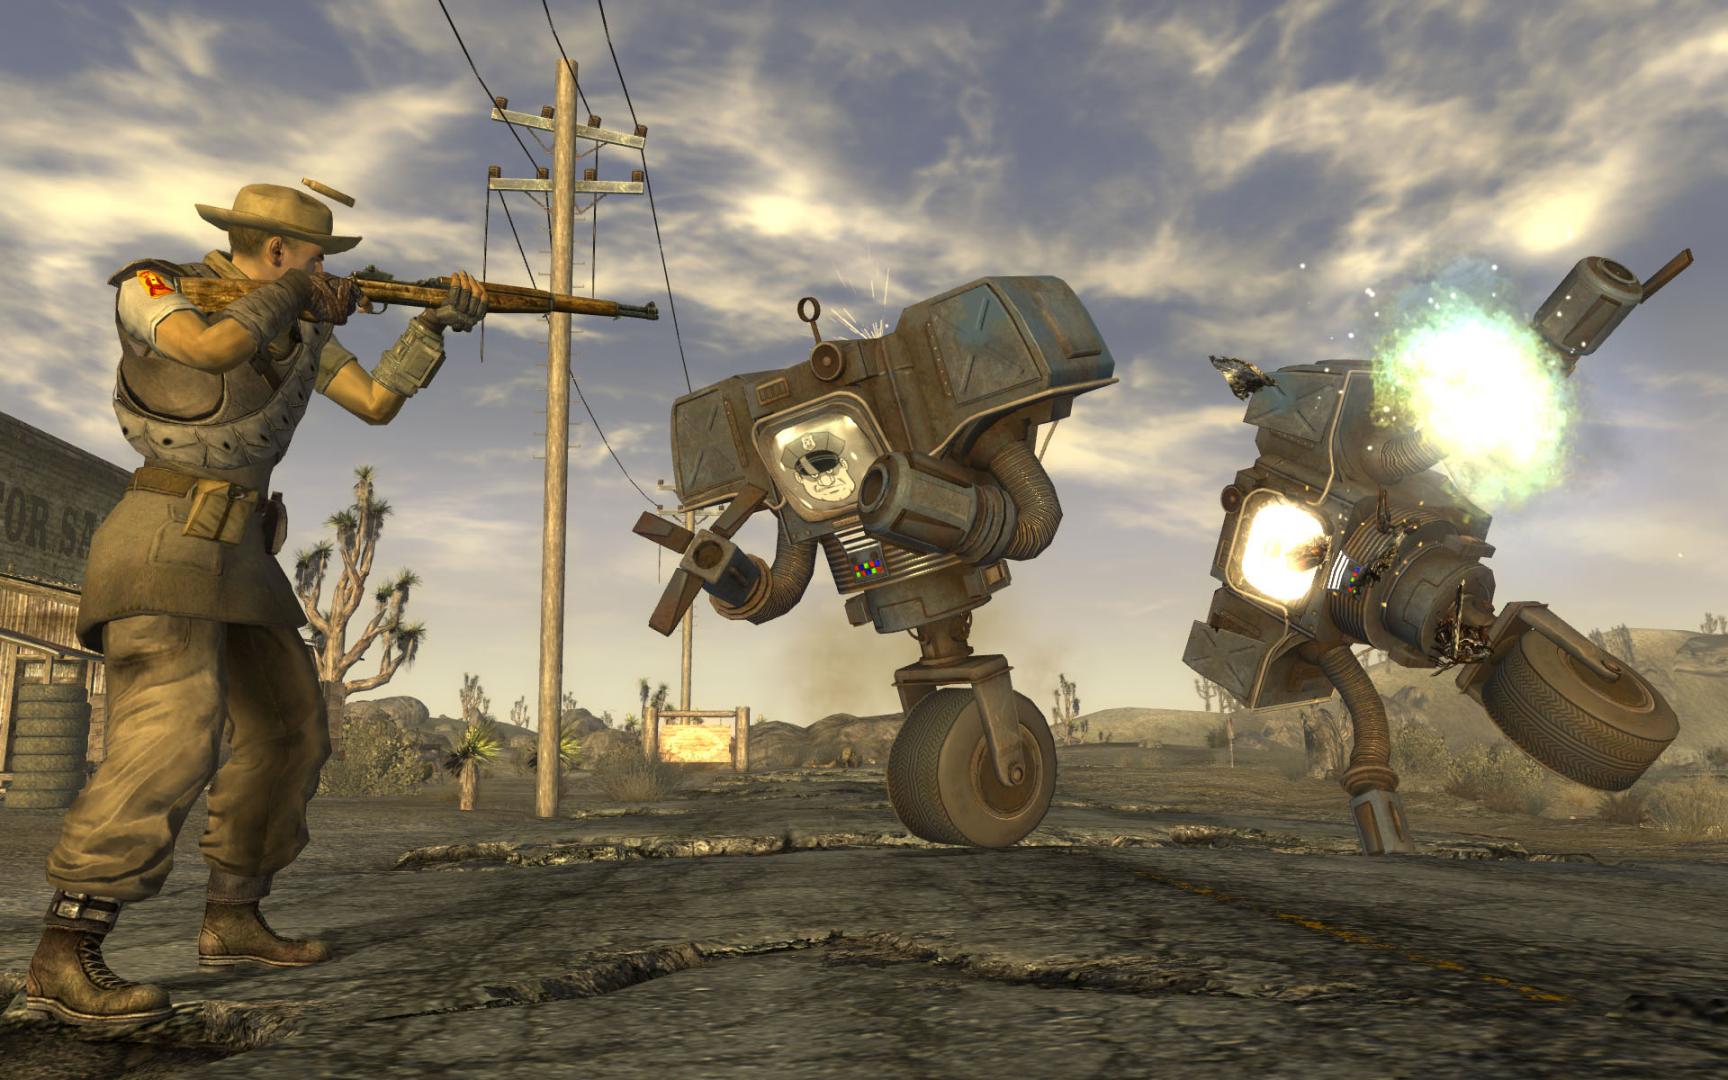 Игрок переспал со всеми персонажами в Fallout: New Vegas за рекордно короткое время — видео